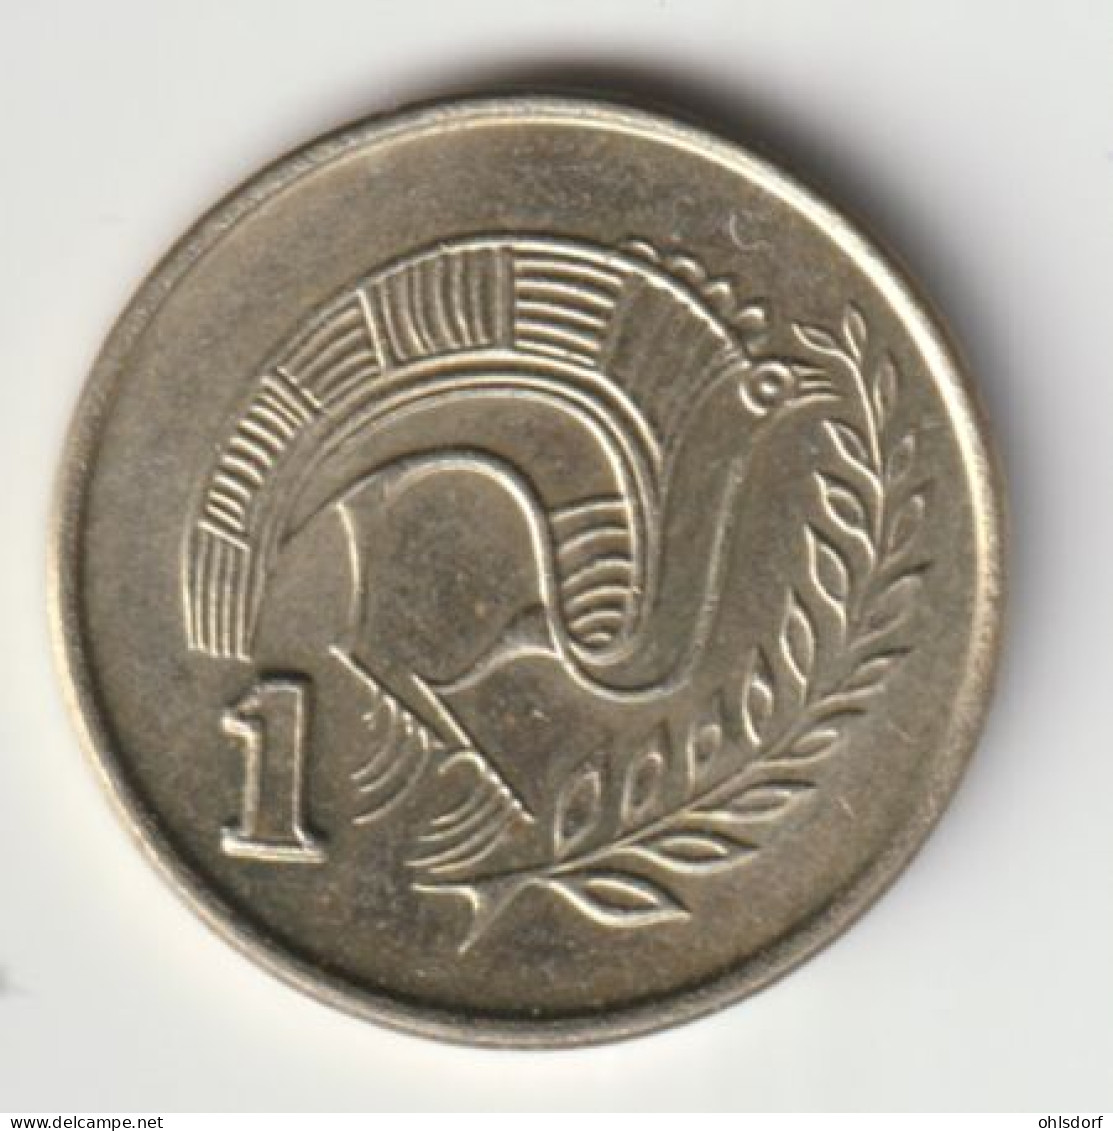 CYPRUS 1992: 1 Cent, KM 53.3 - Cyprus